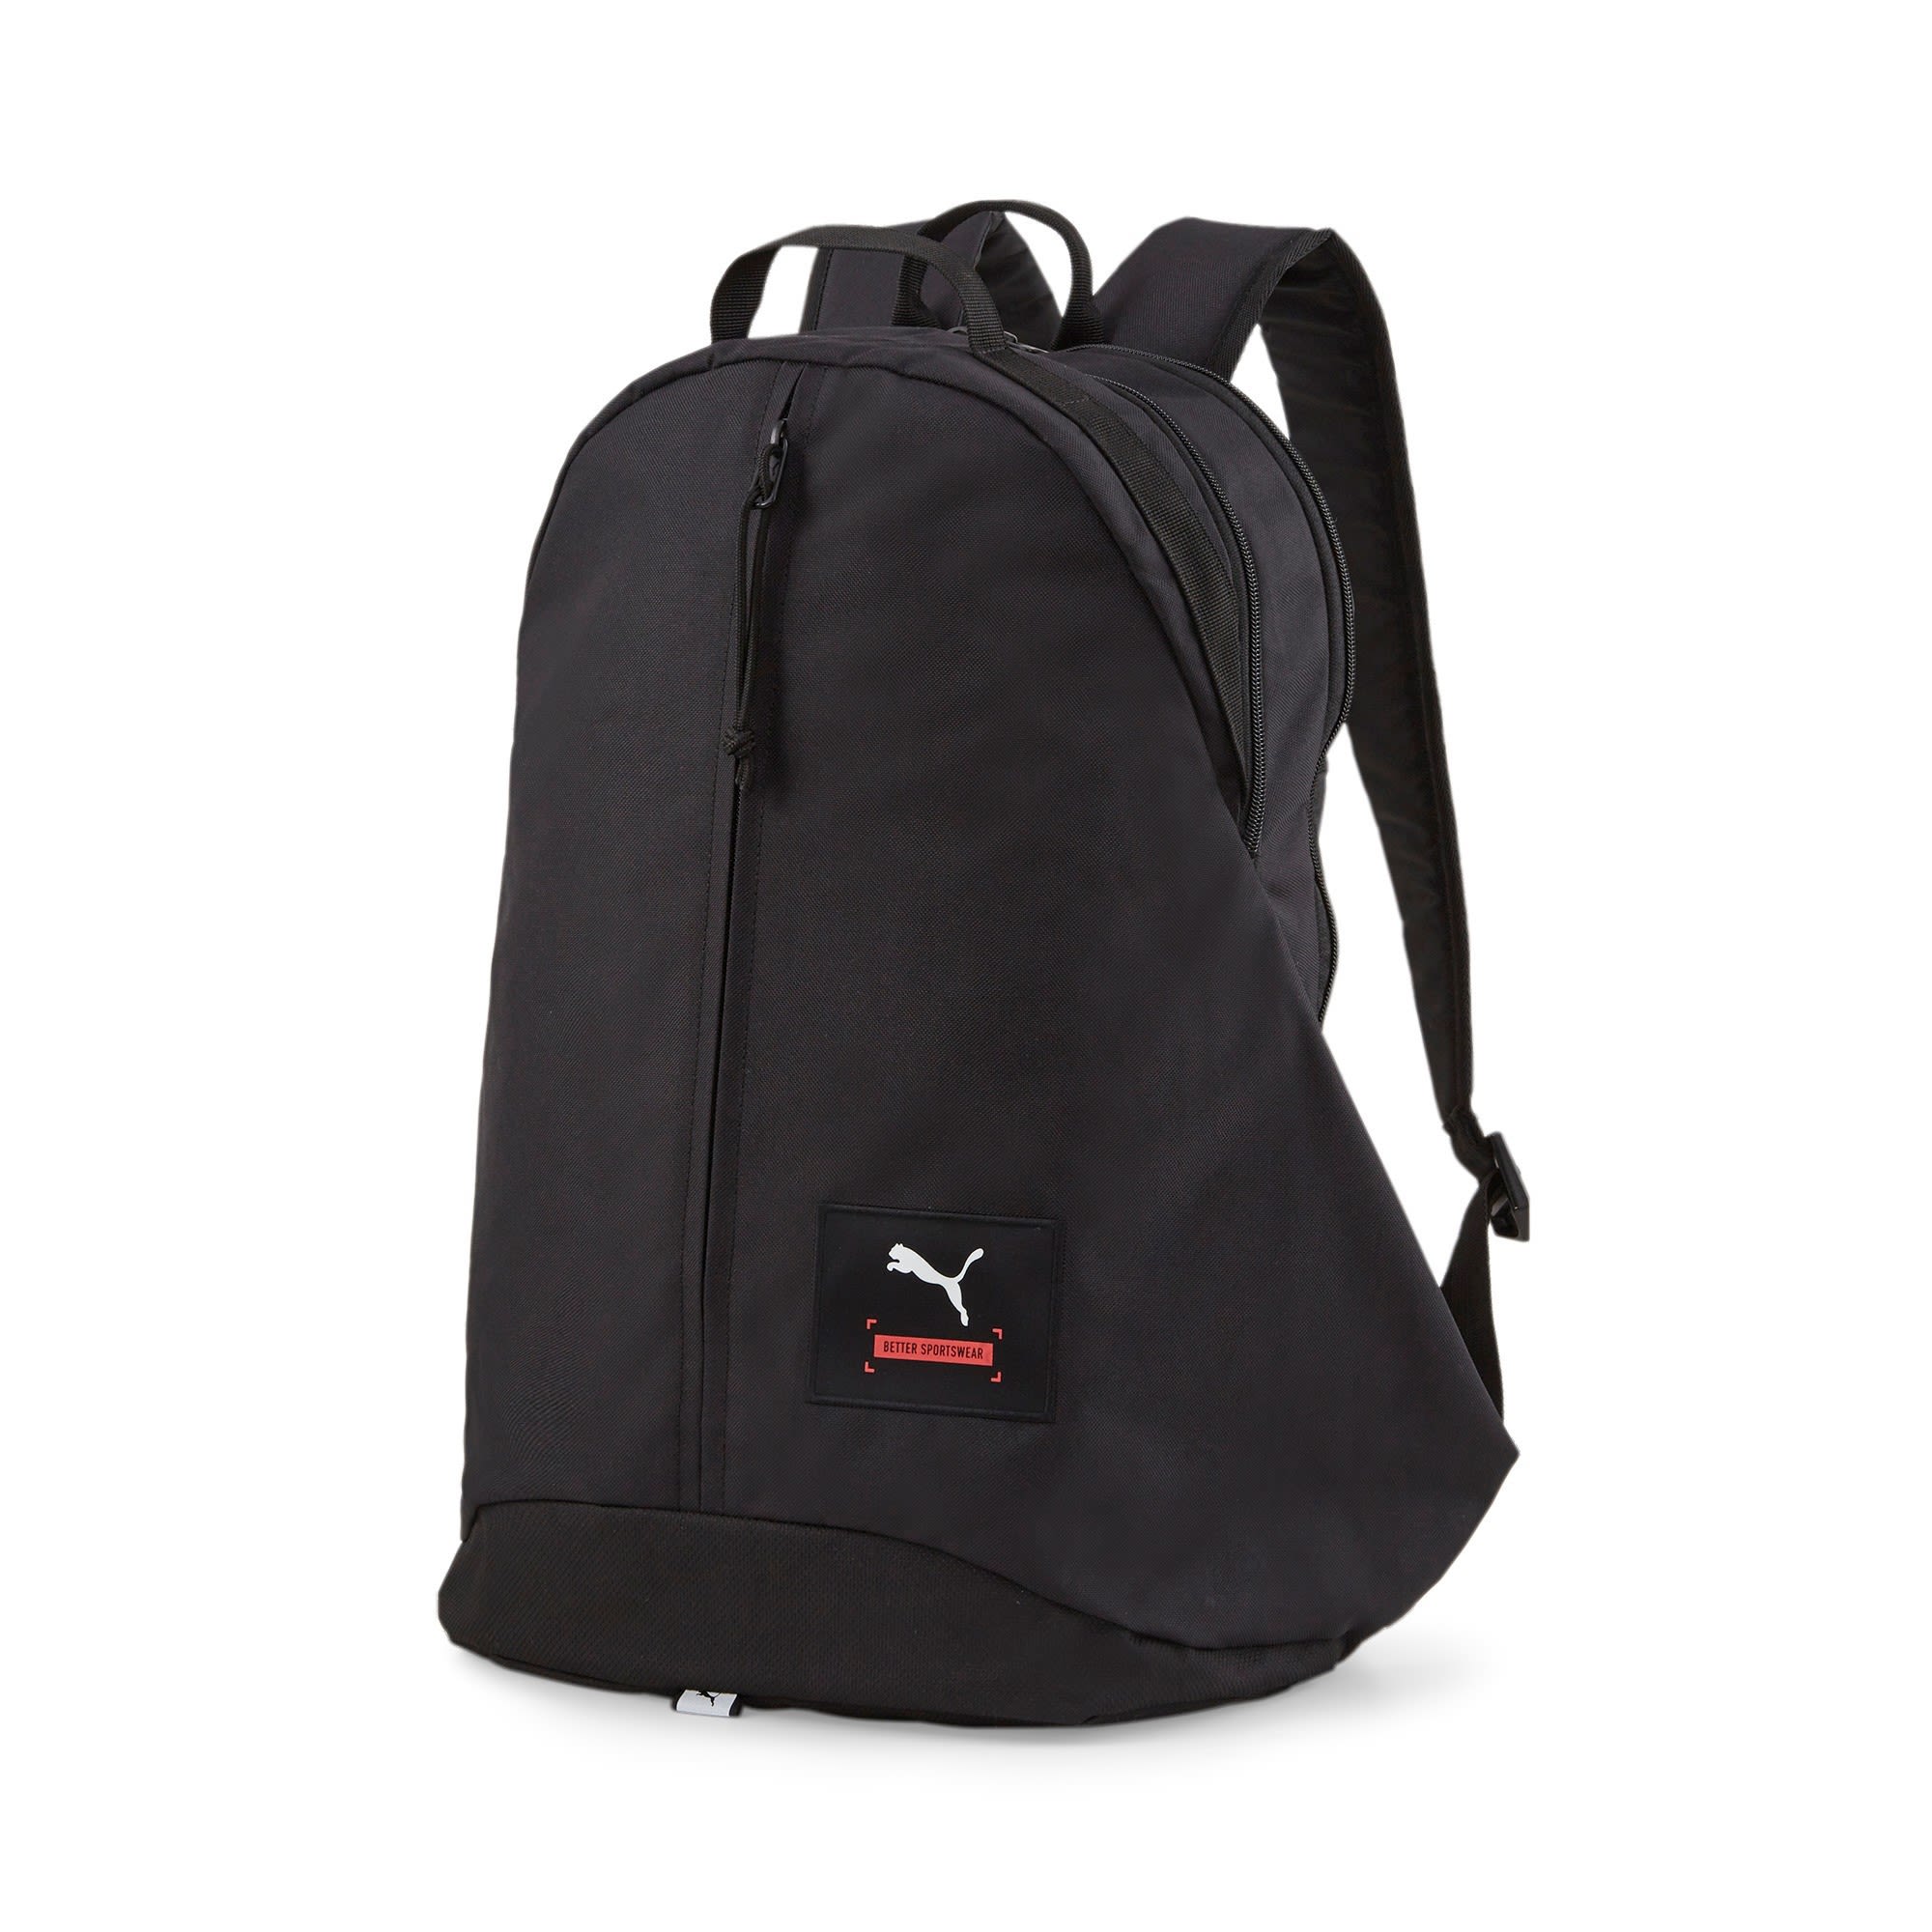 Puma Better Backpack Schwarz- Daypacks- Grsse One Size - Farbe Puma Black unter Puma